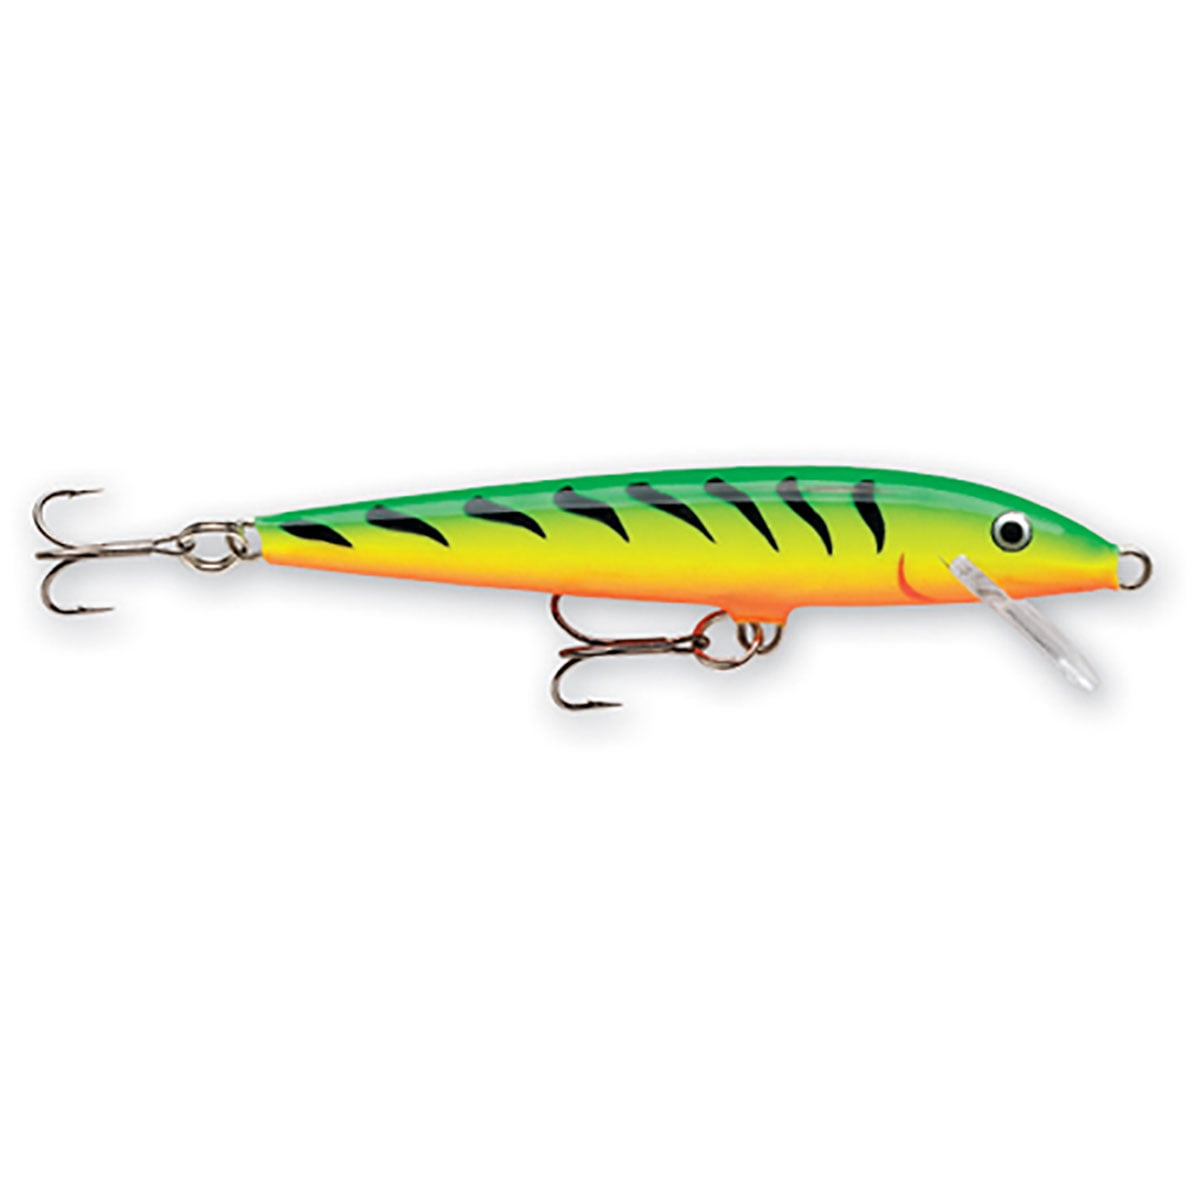 Rapala Original Floating Minnow 03 Fishing Lure 1.5 1/16oz Rainbow Trout 